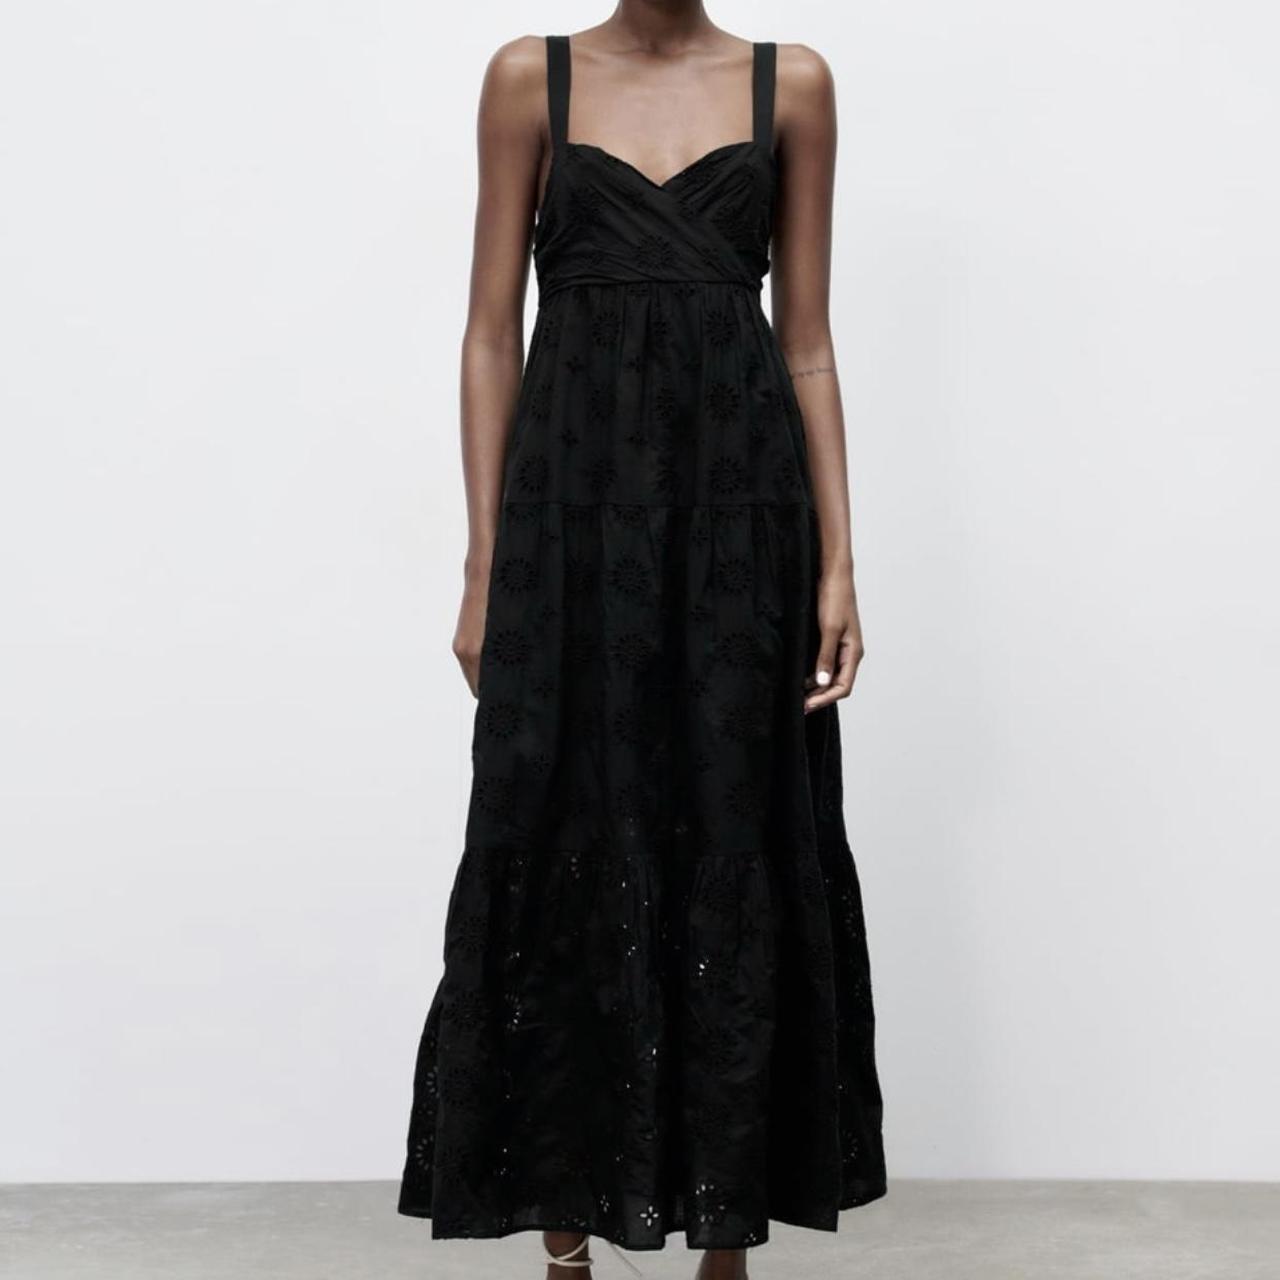 Zara midi dress with cutwork embroidery Black... - Depop